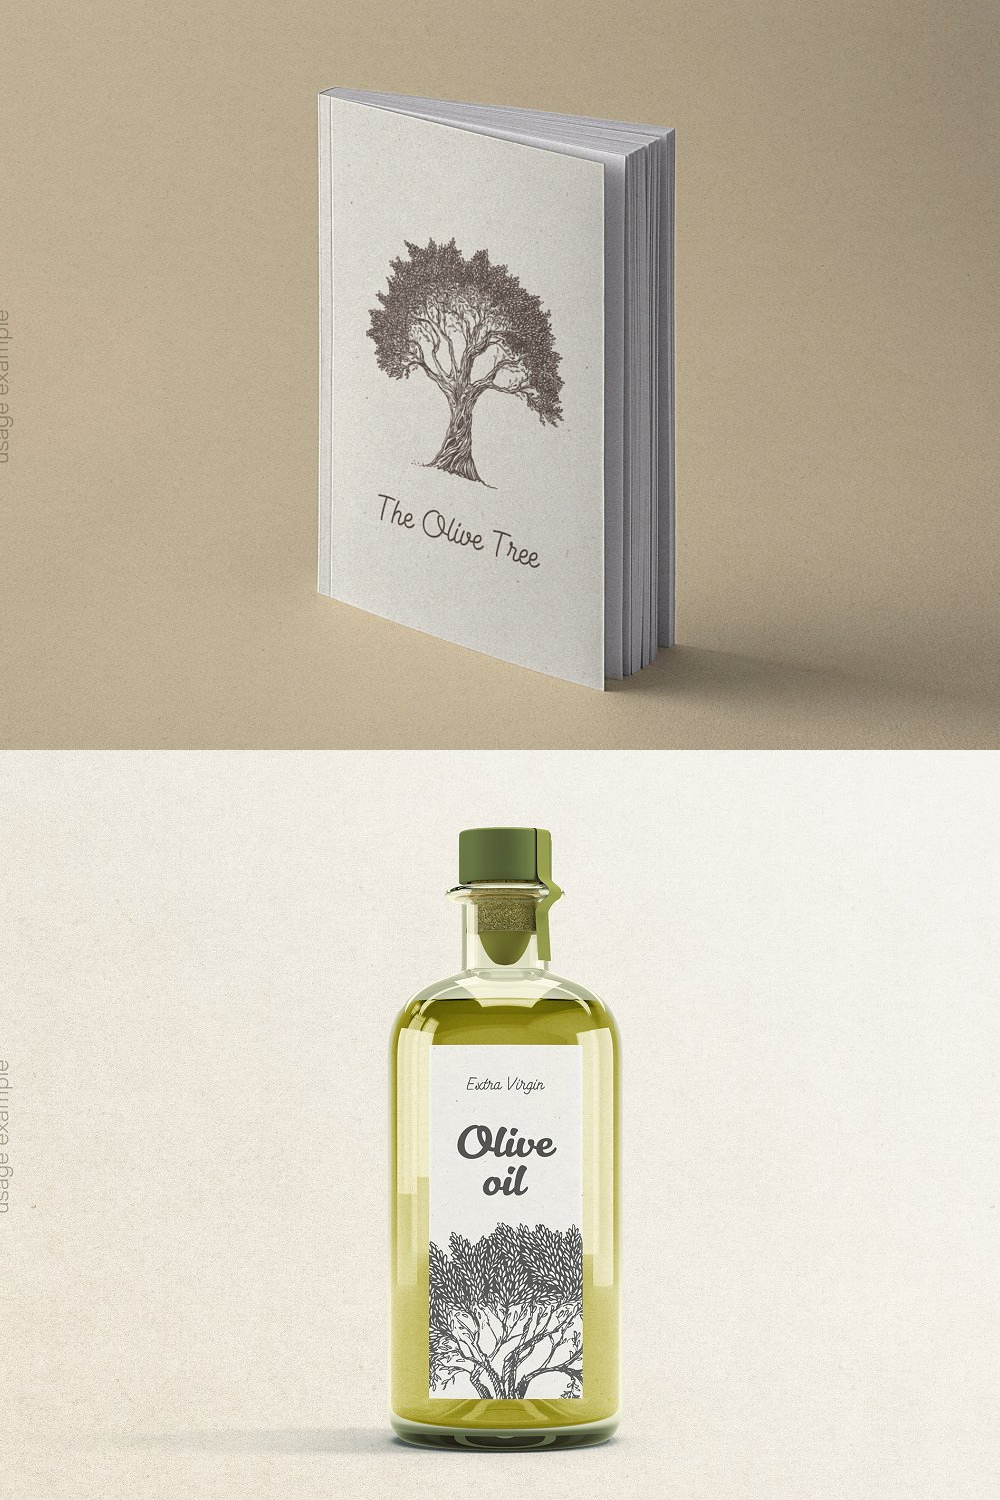 Illustrations set of illustrations of olive trees of pinterest.